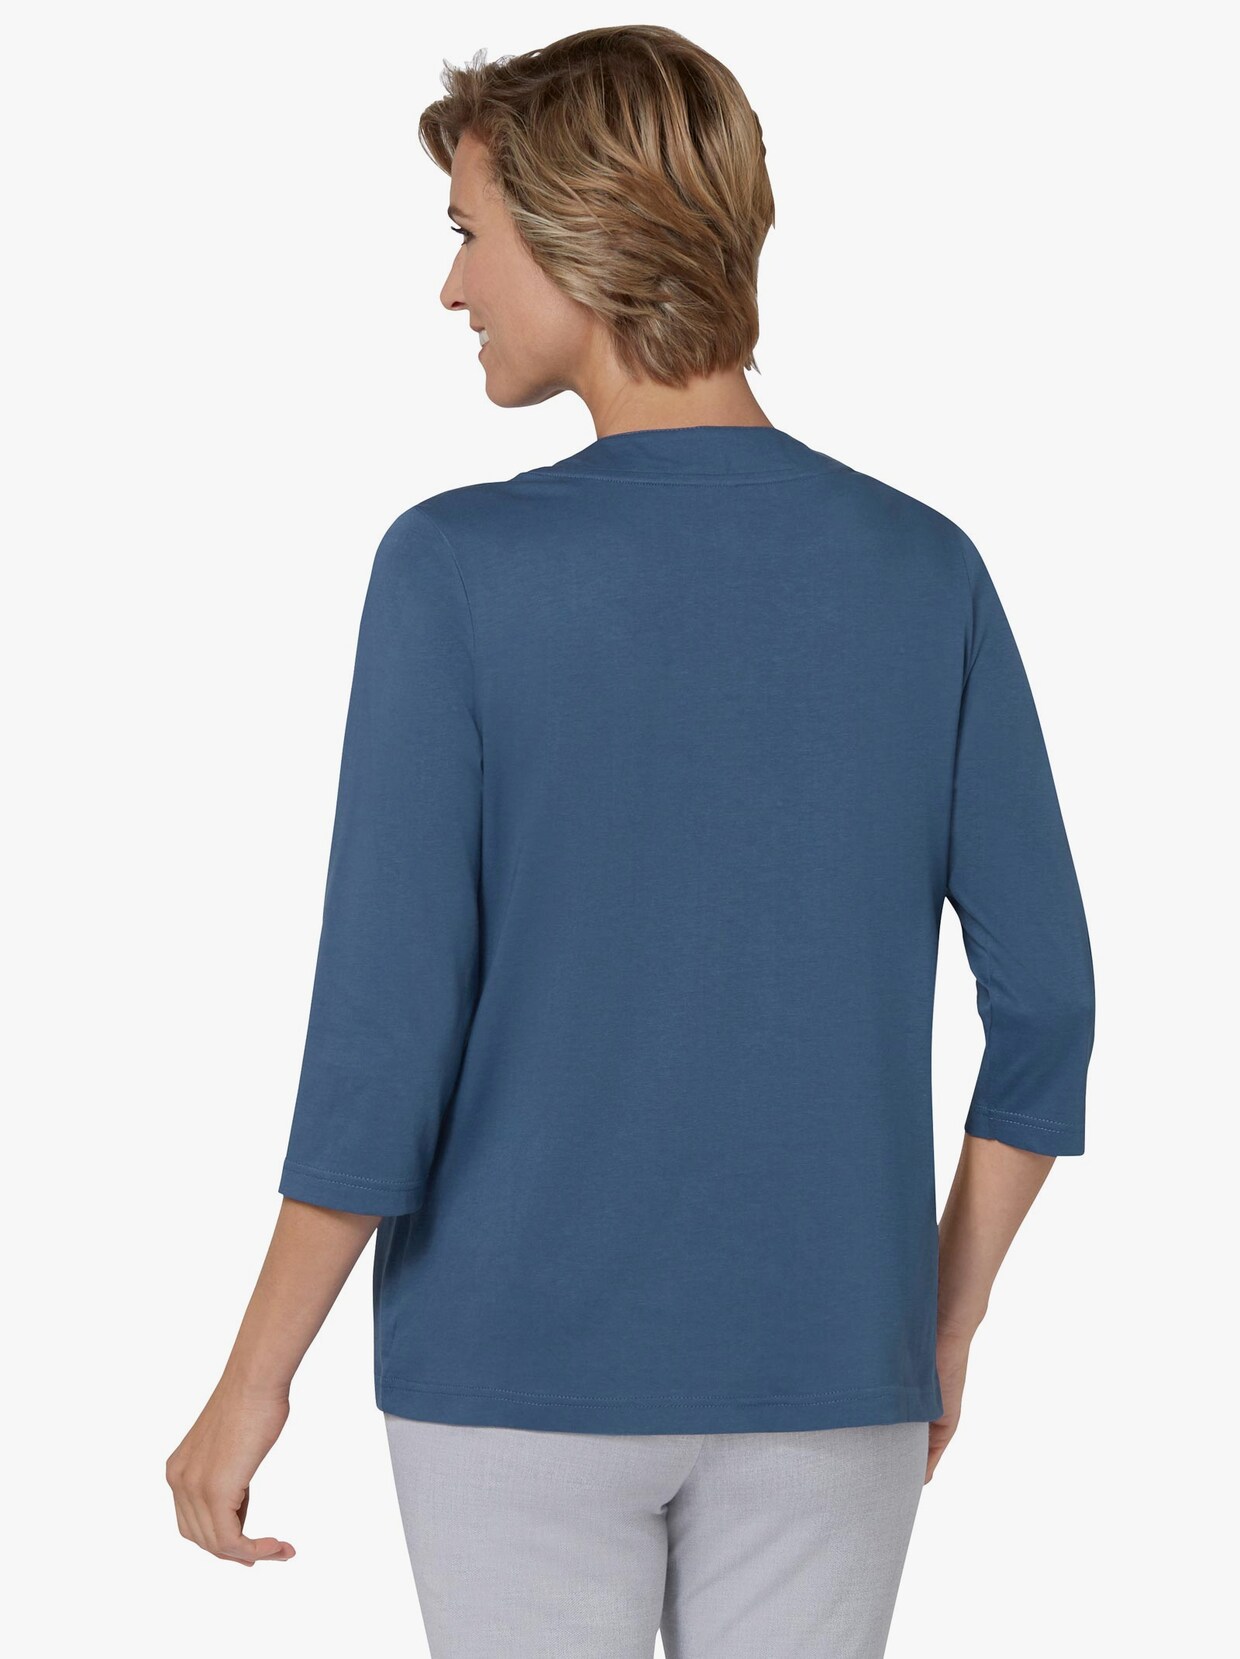 2-in-1-Shirt - jeansblau